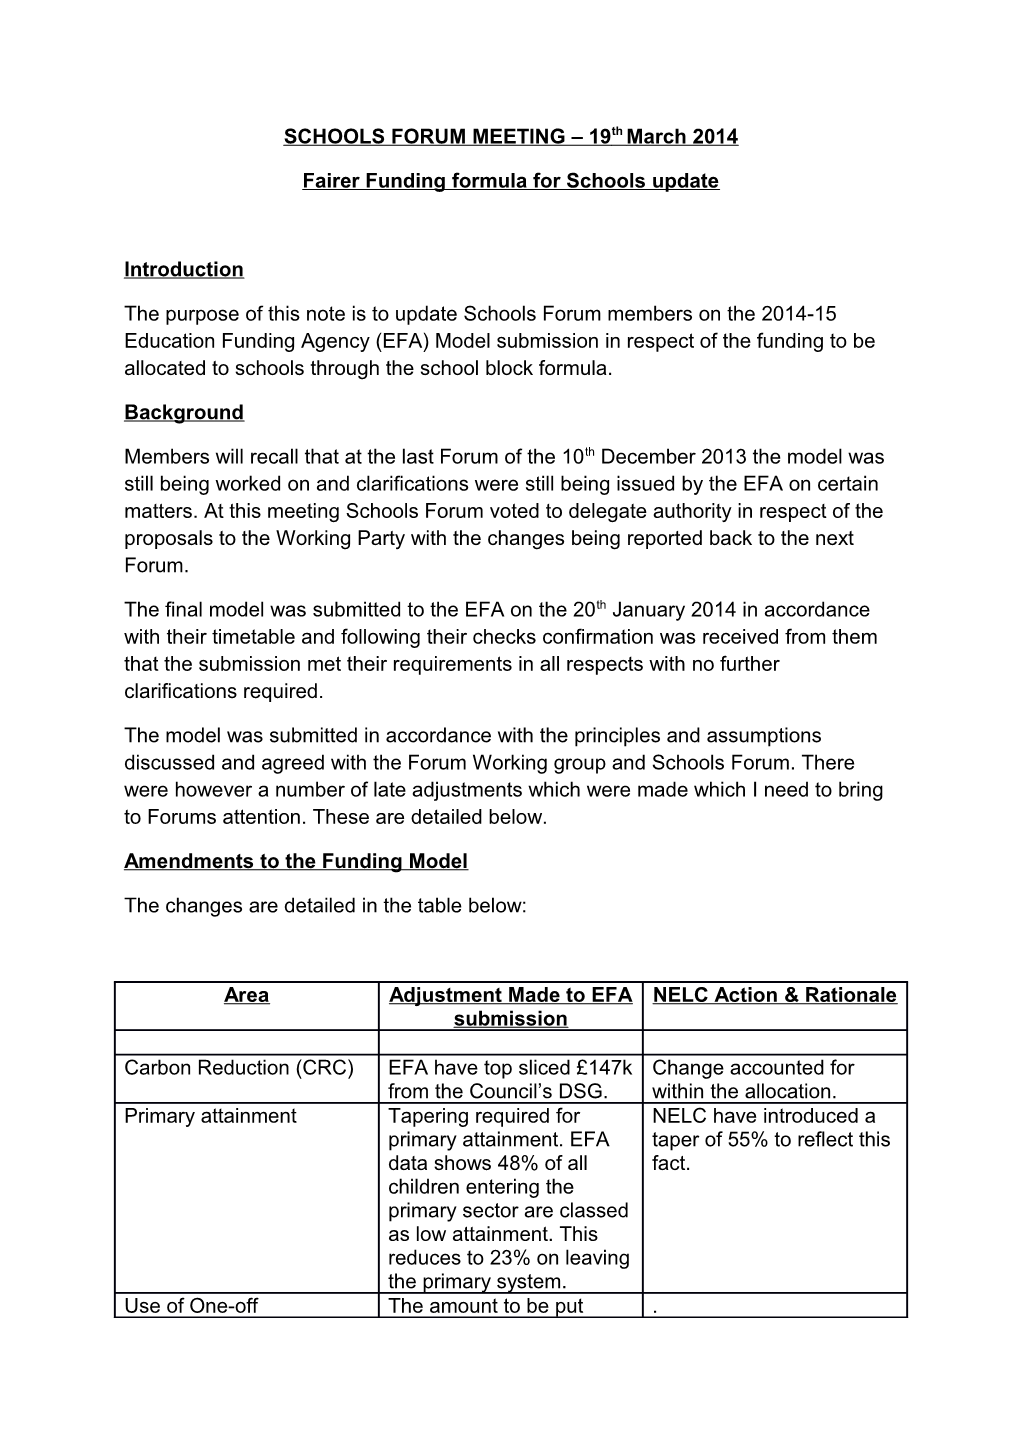 Fairer Funding Formula for Schools Update